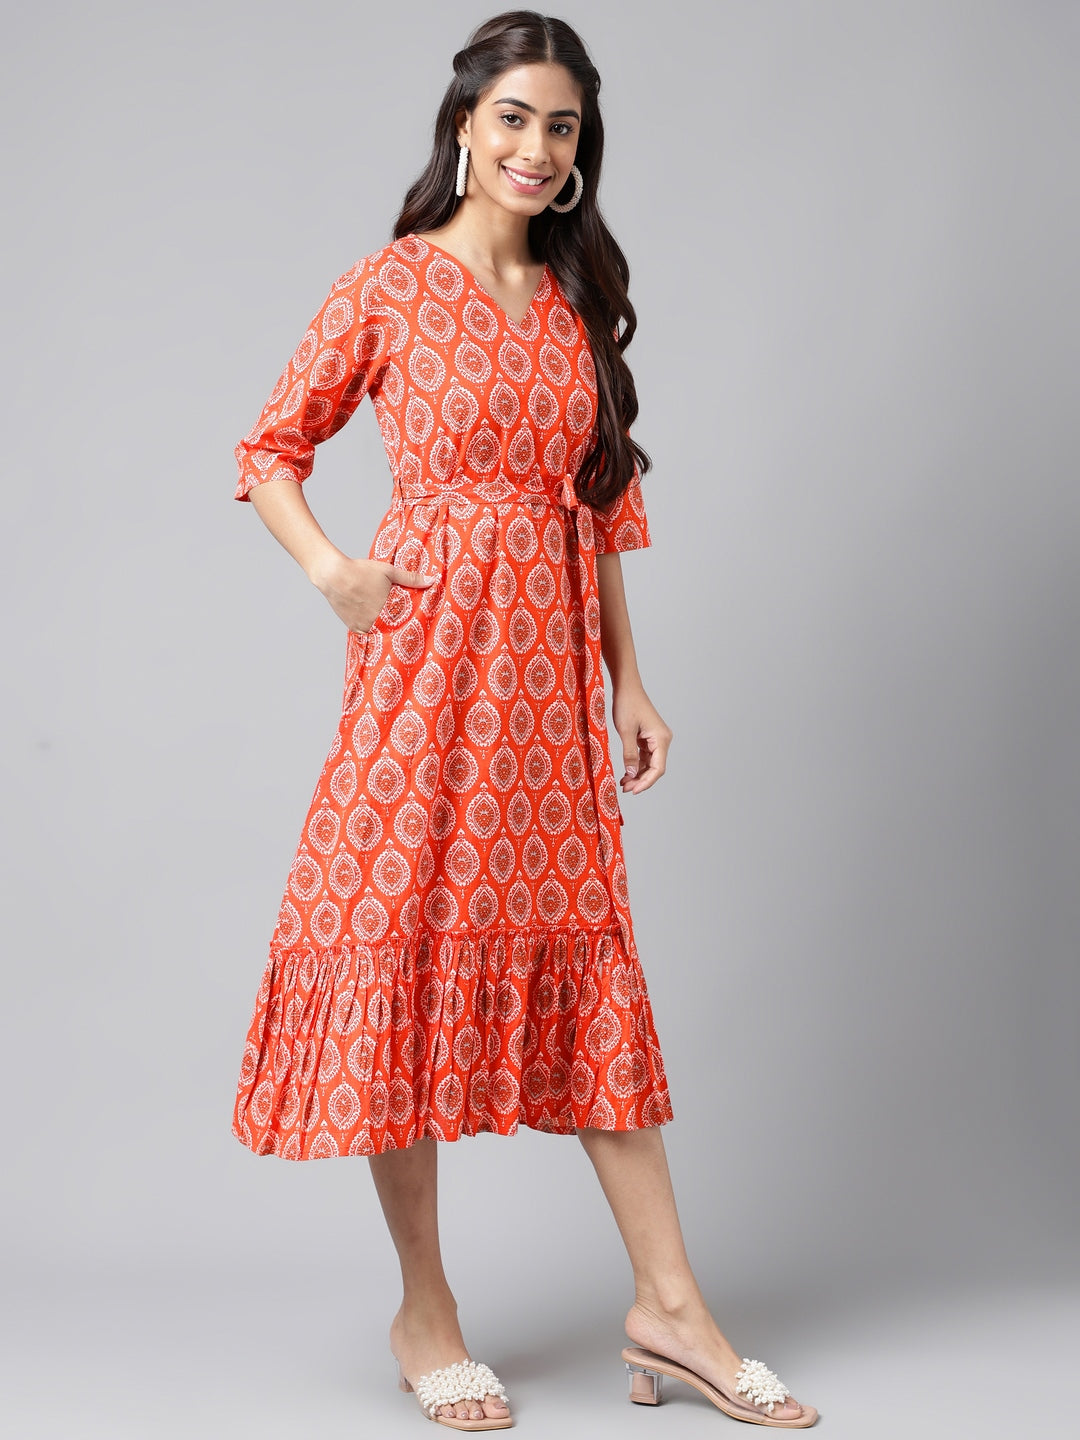 Women's Ethnic Motifs Printed Orange Cotton Dress - Janasya